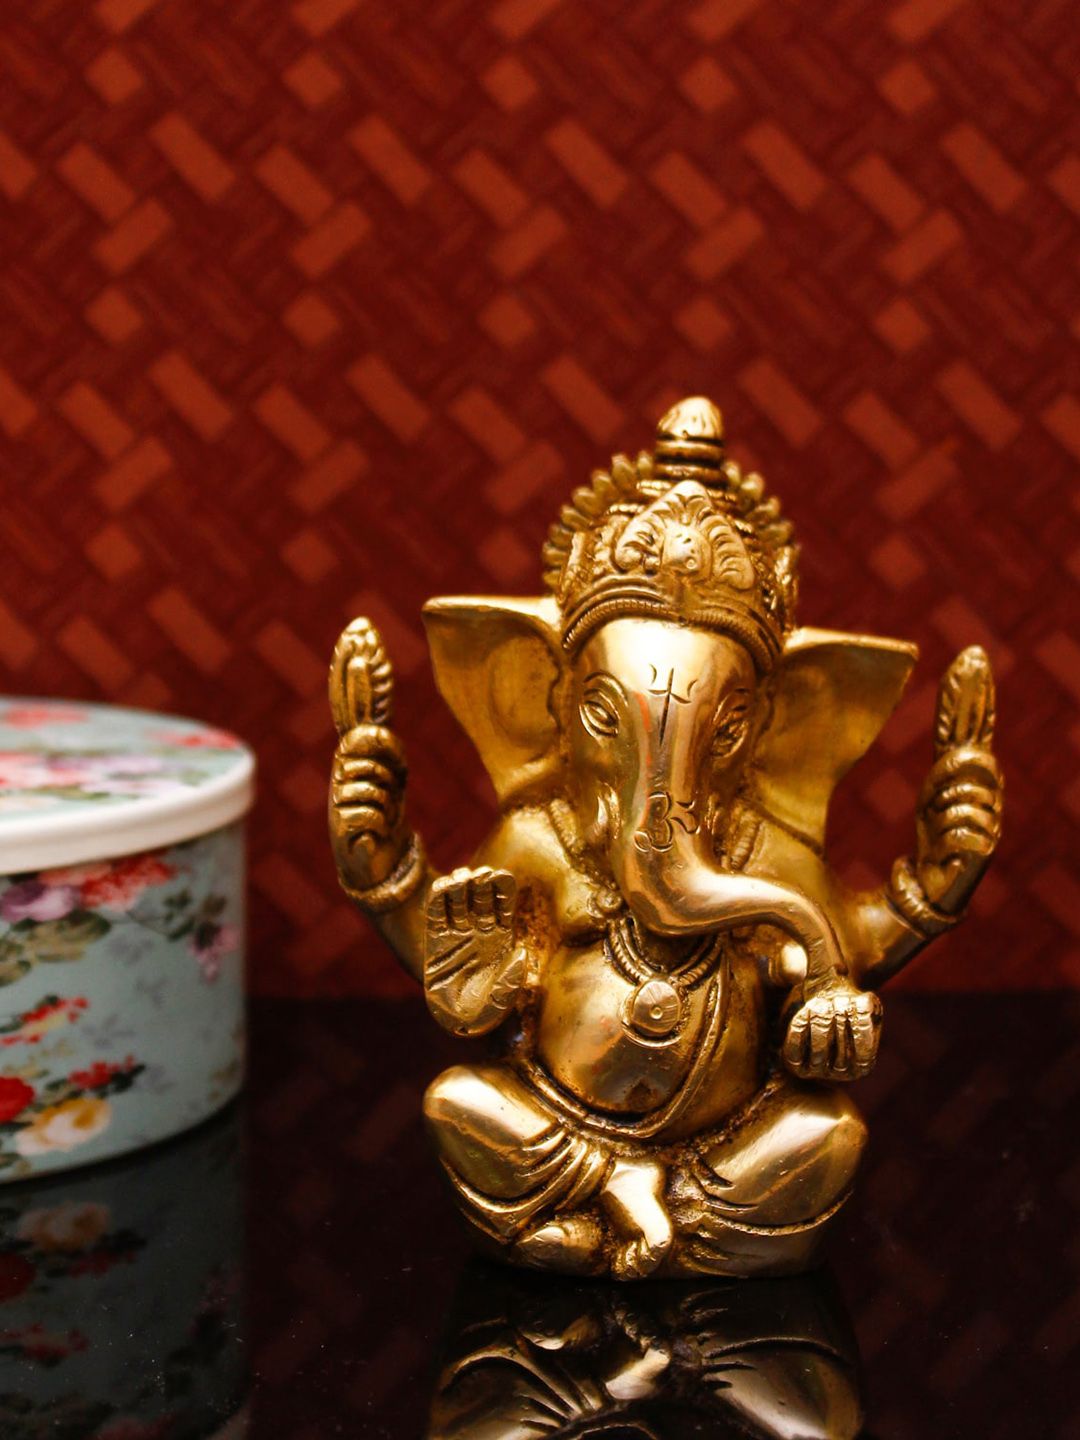 StatueStudio Gold-Toned Ganesha Figurine Showpiece Price in India